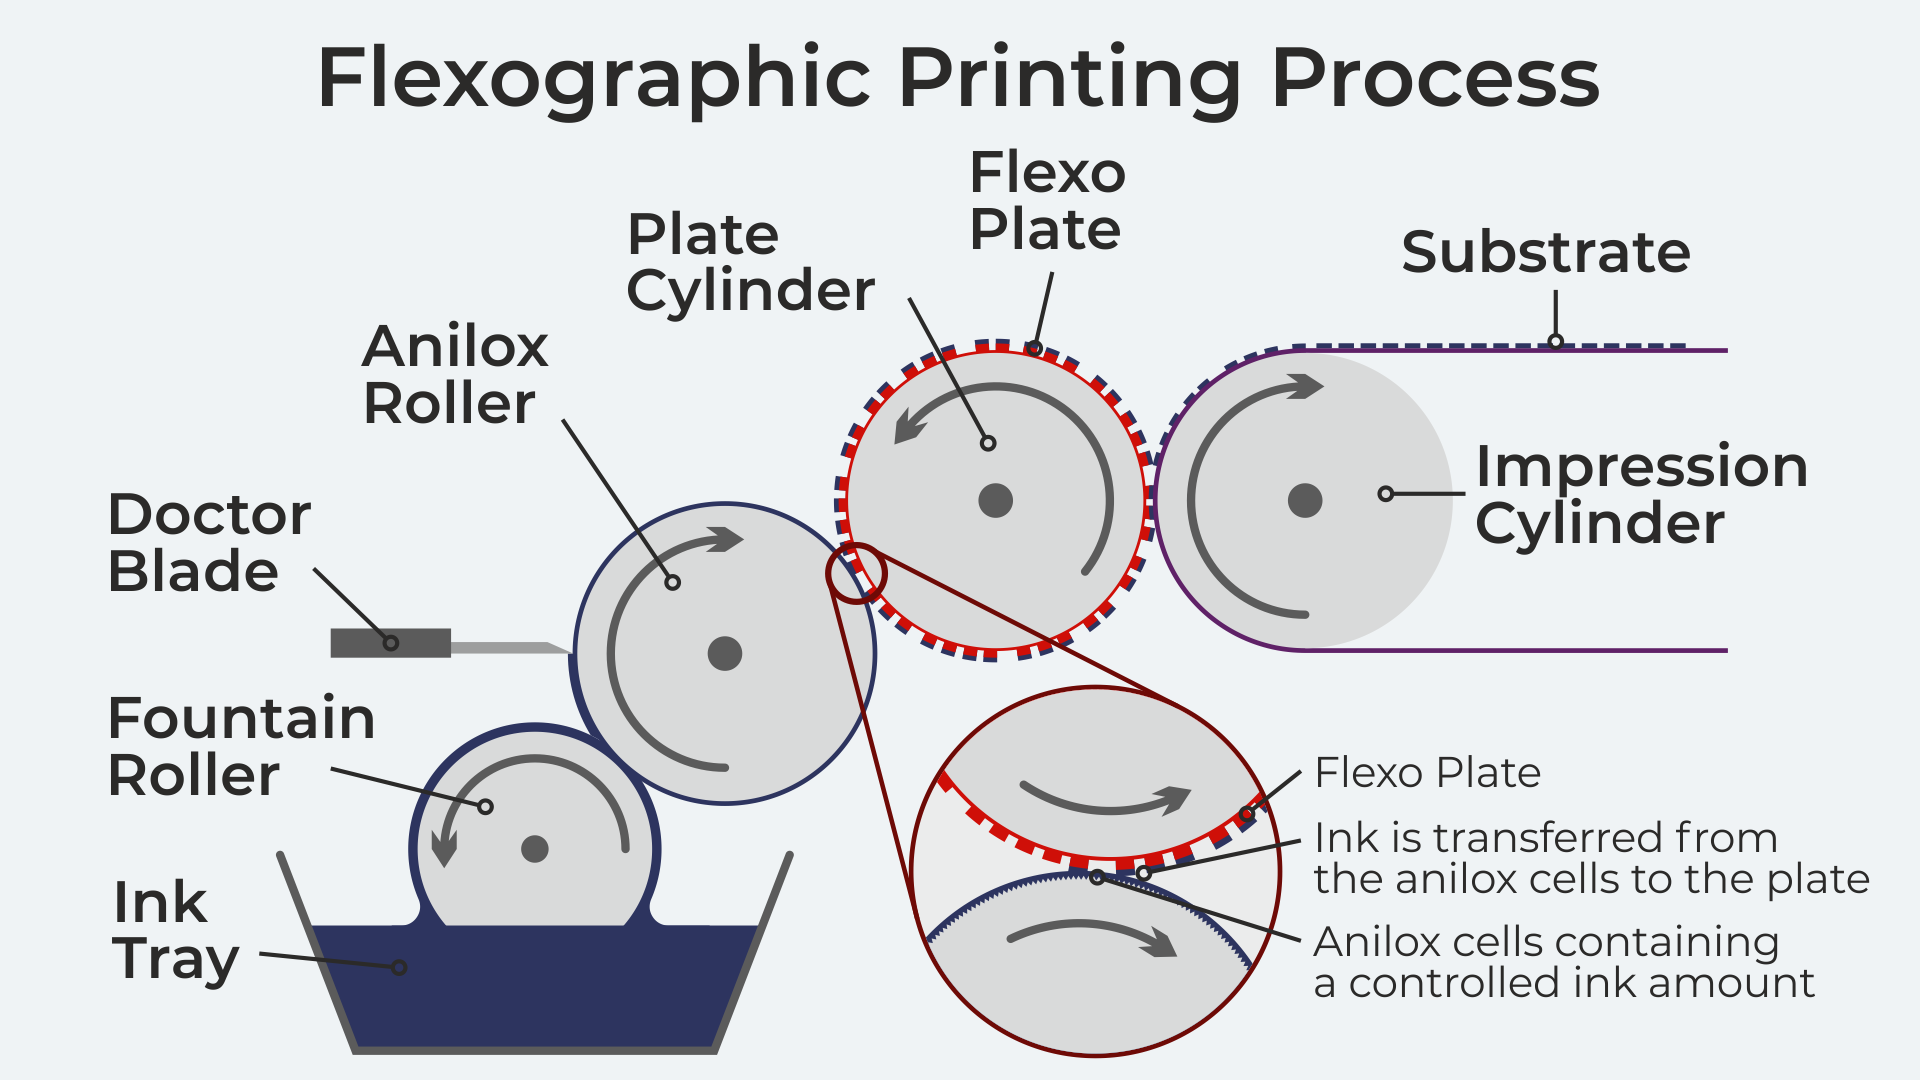 Flexographic printing process diagram